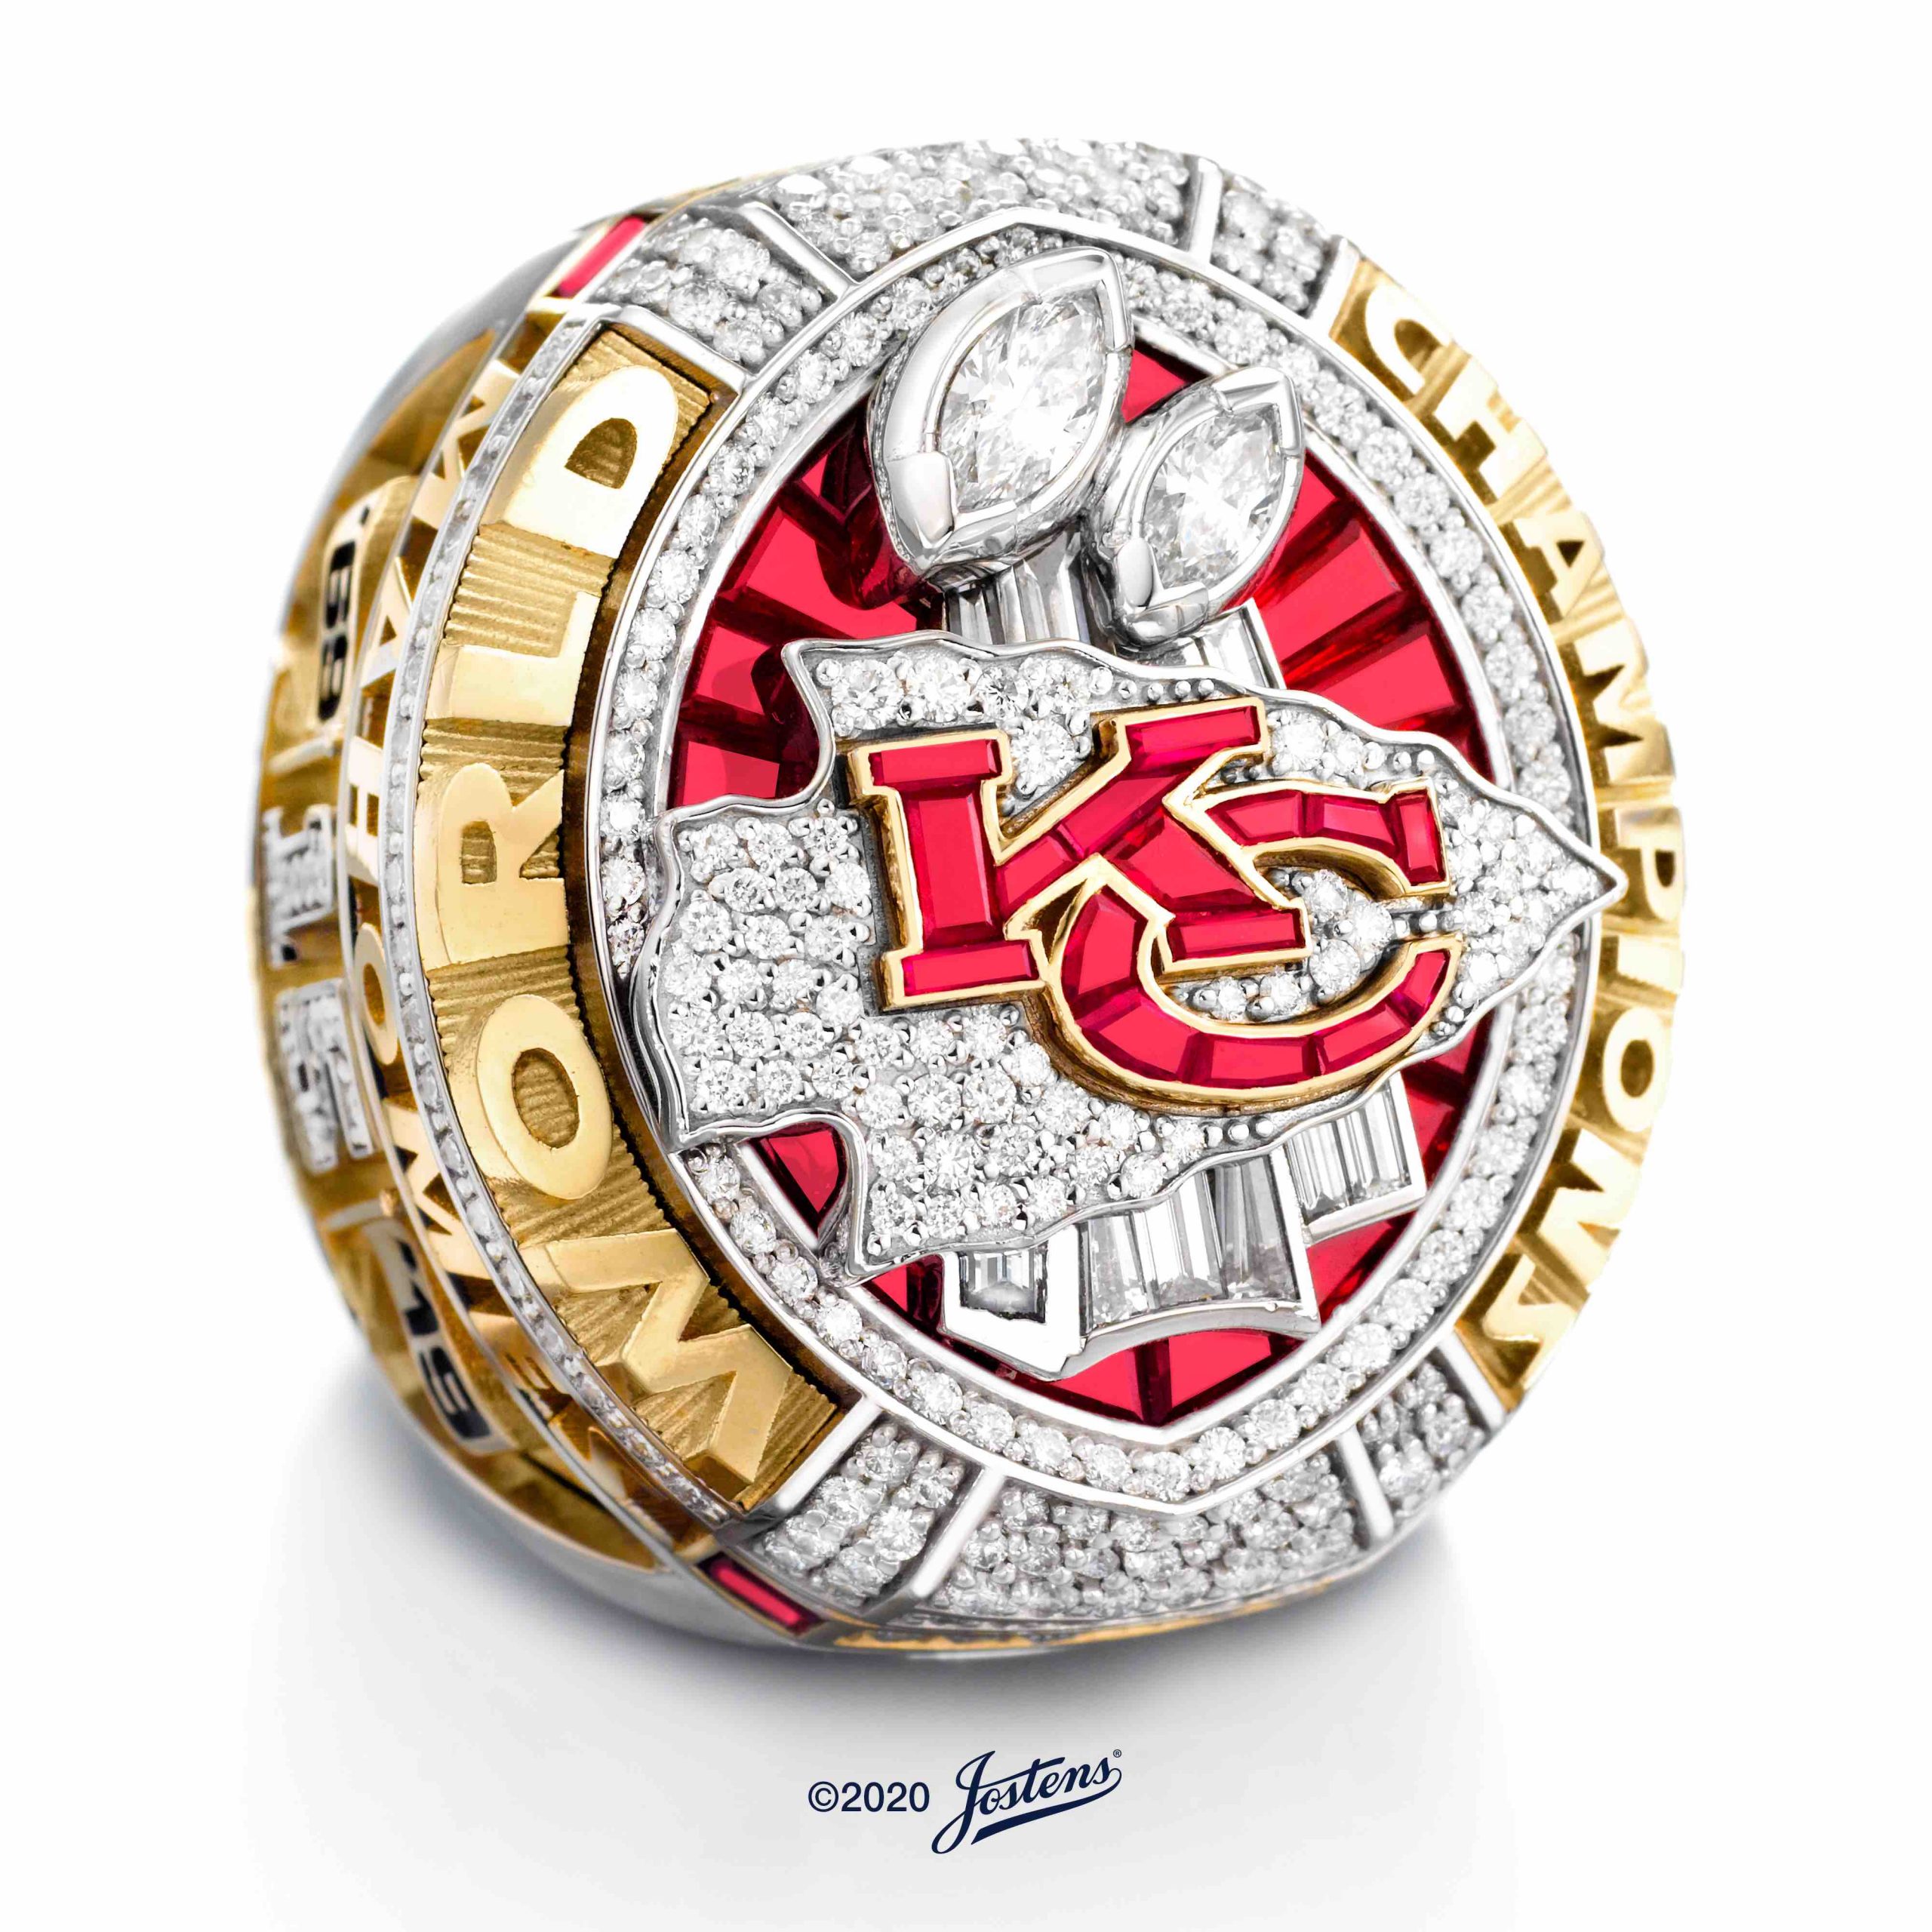 Kansas City Chiefs' Super Bowl LVII championship rings revealed